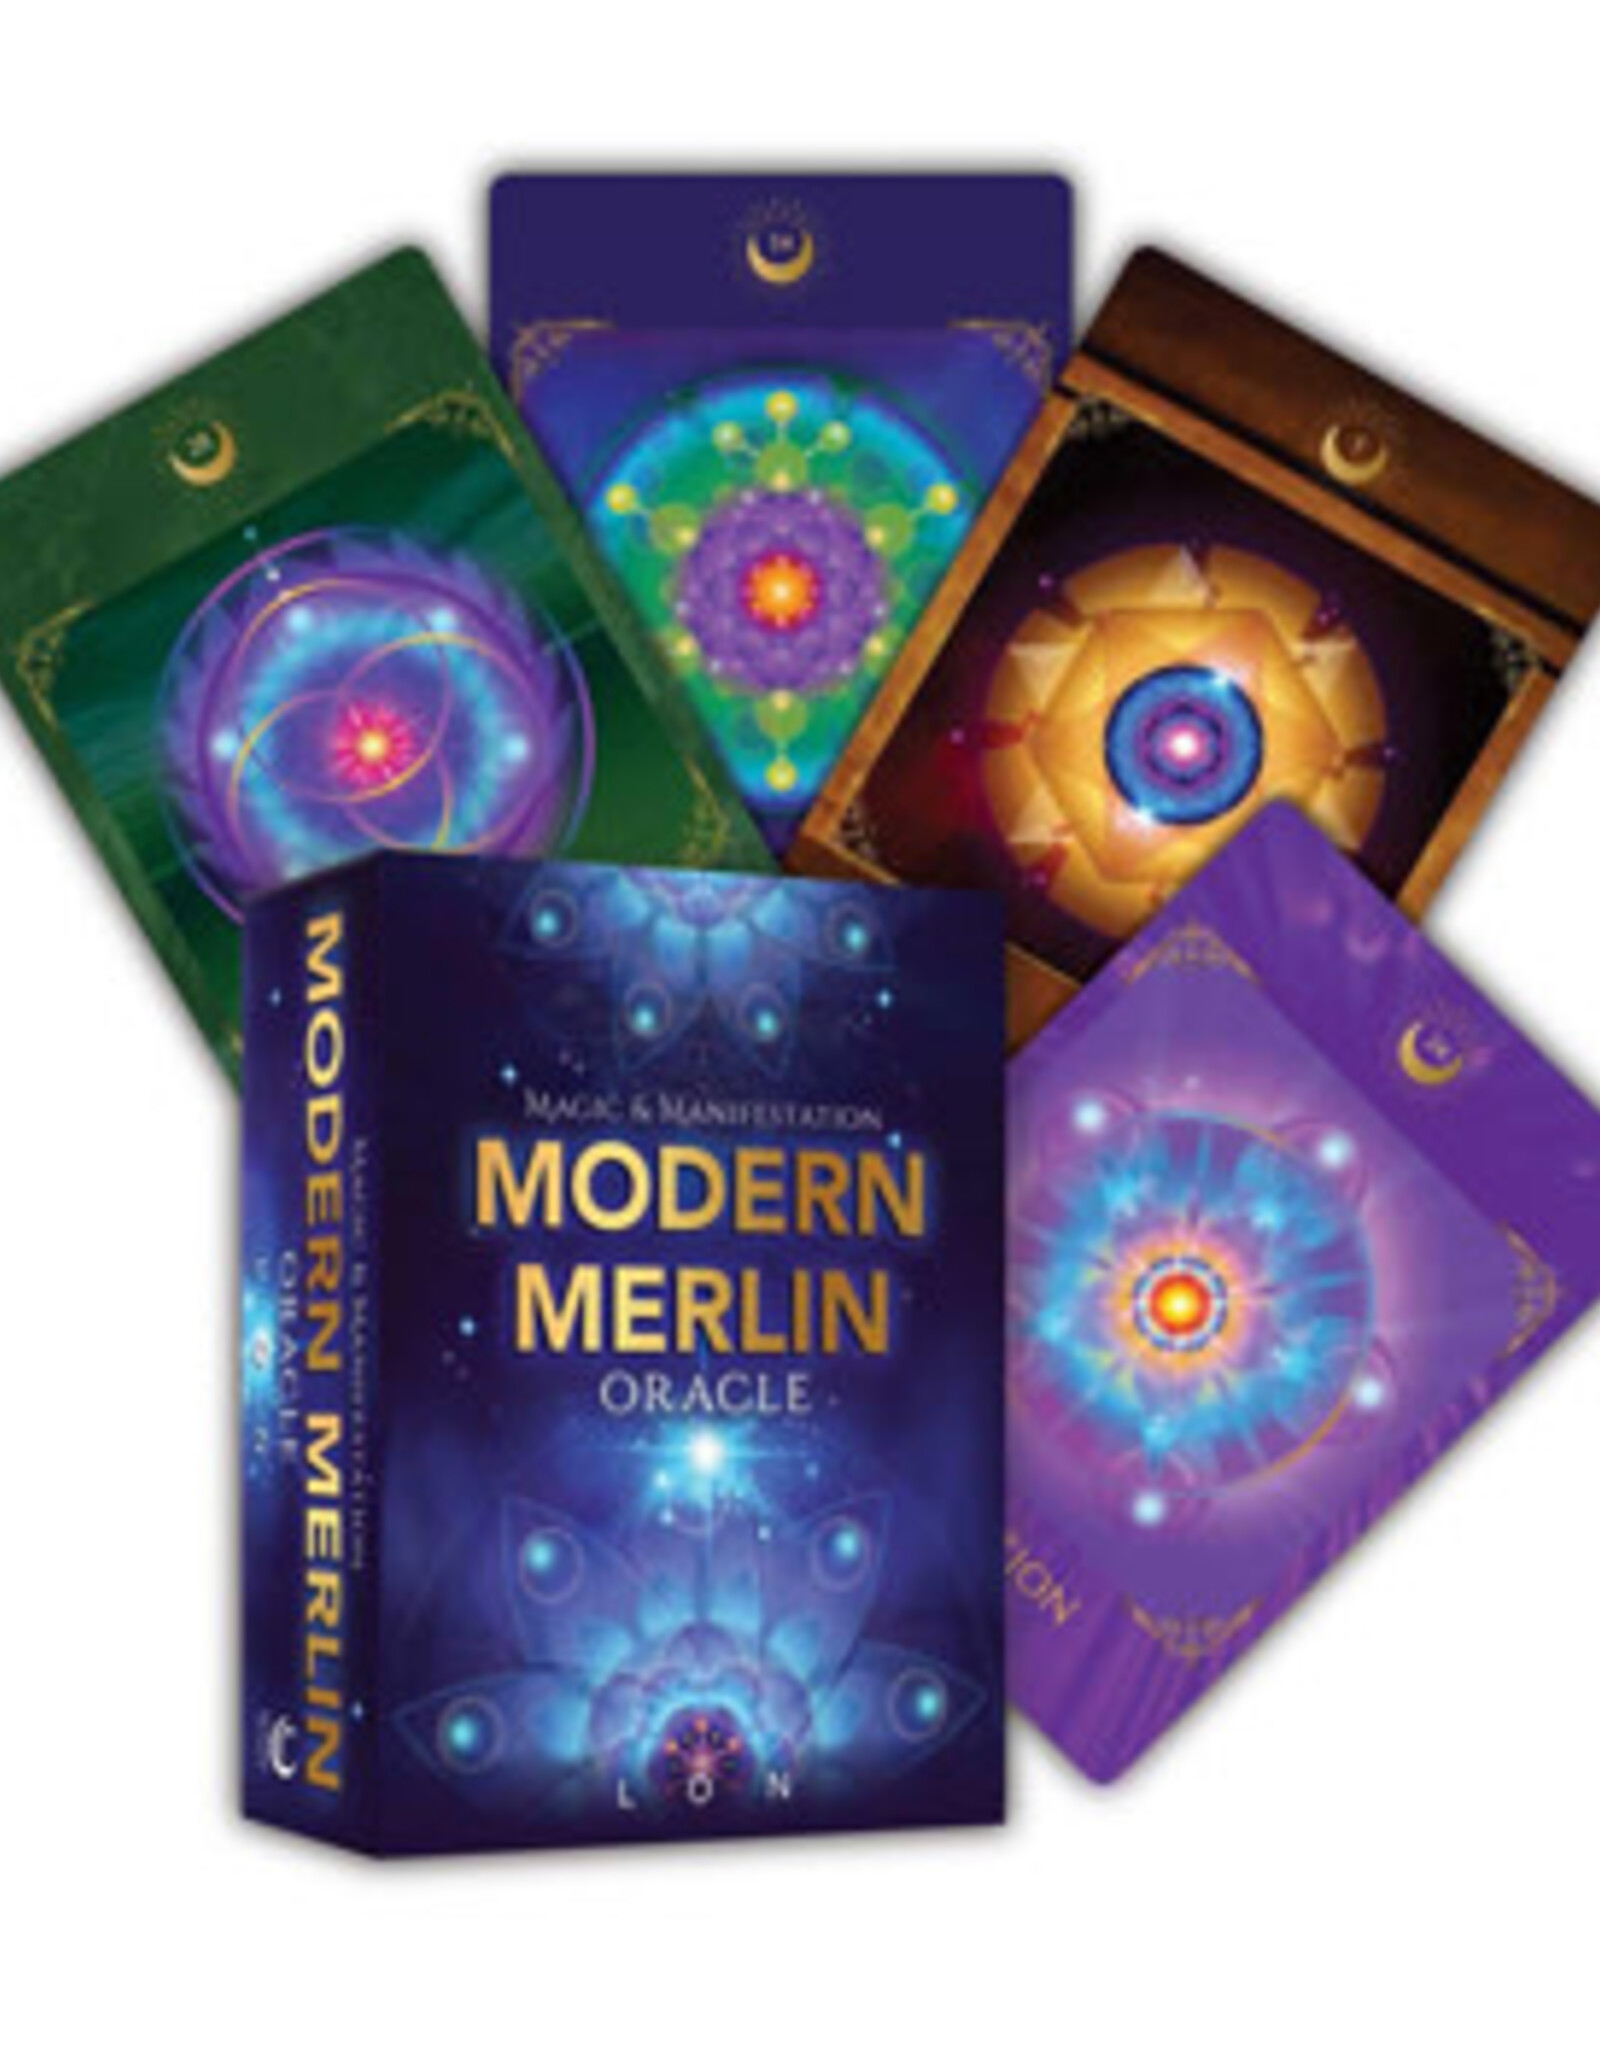 Modern Merlin Oracle: Magic & Manifestation Deck